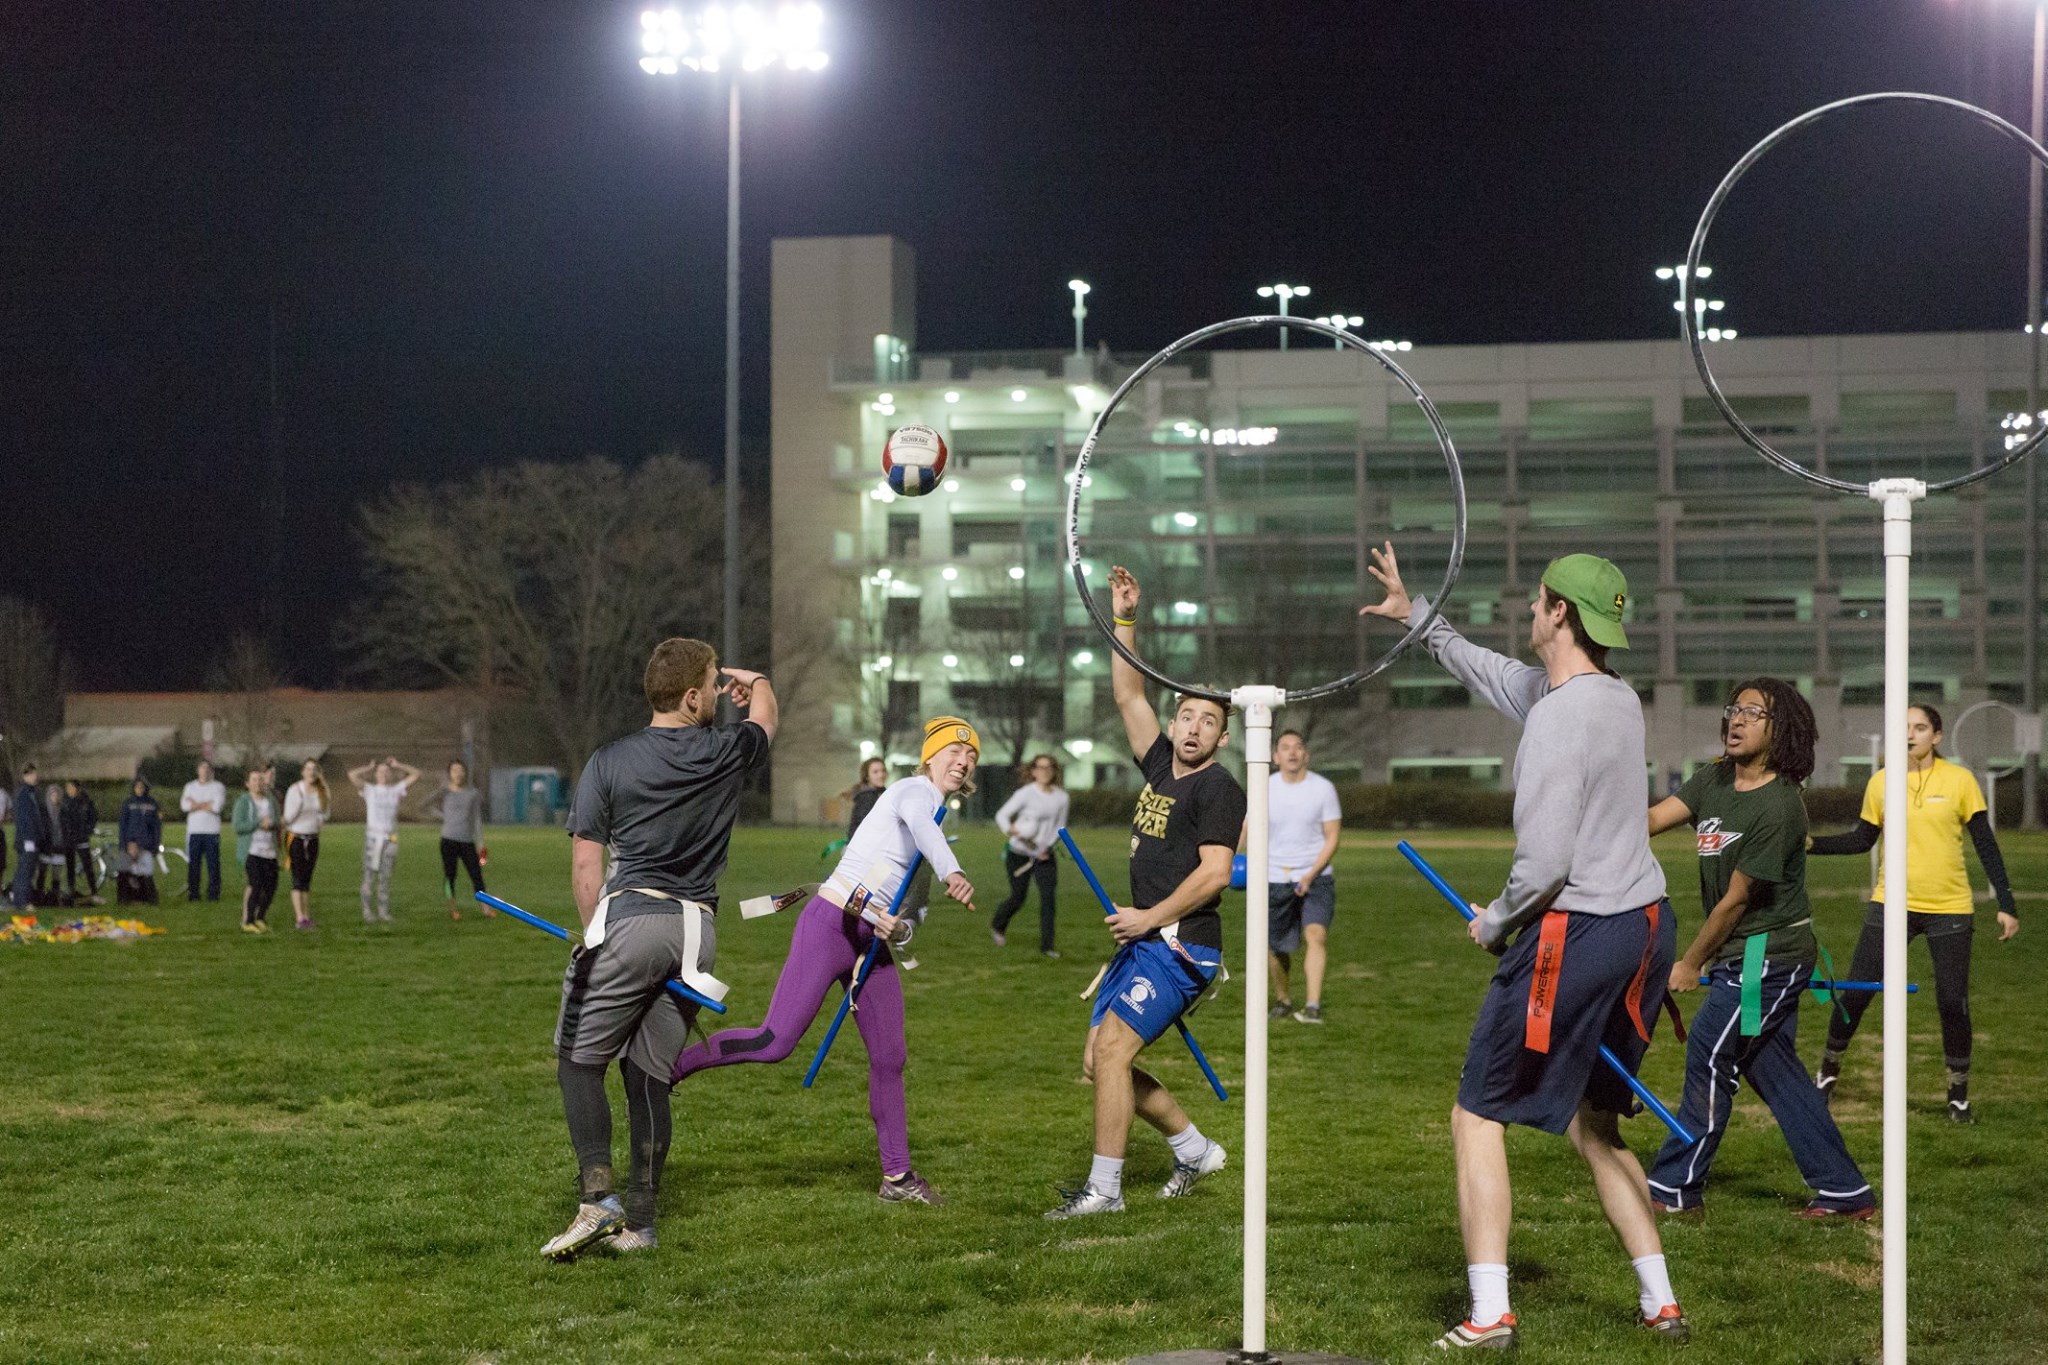 Campus Recreation athletes play quiditch on a UC Davis field after dark